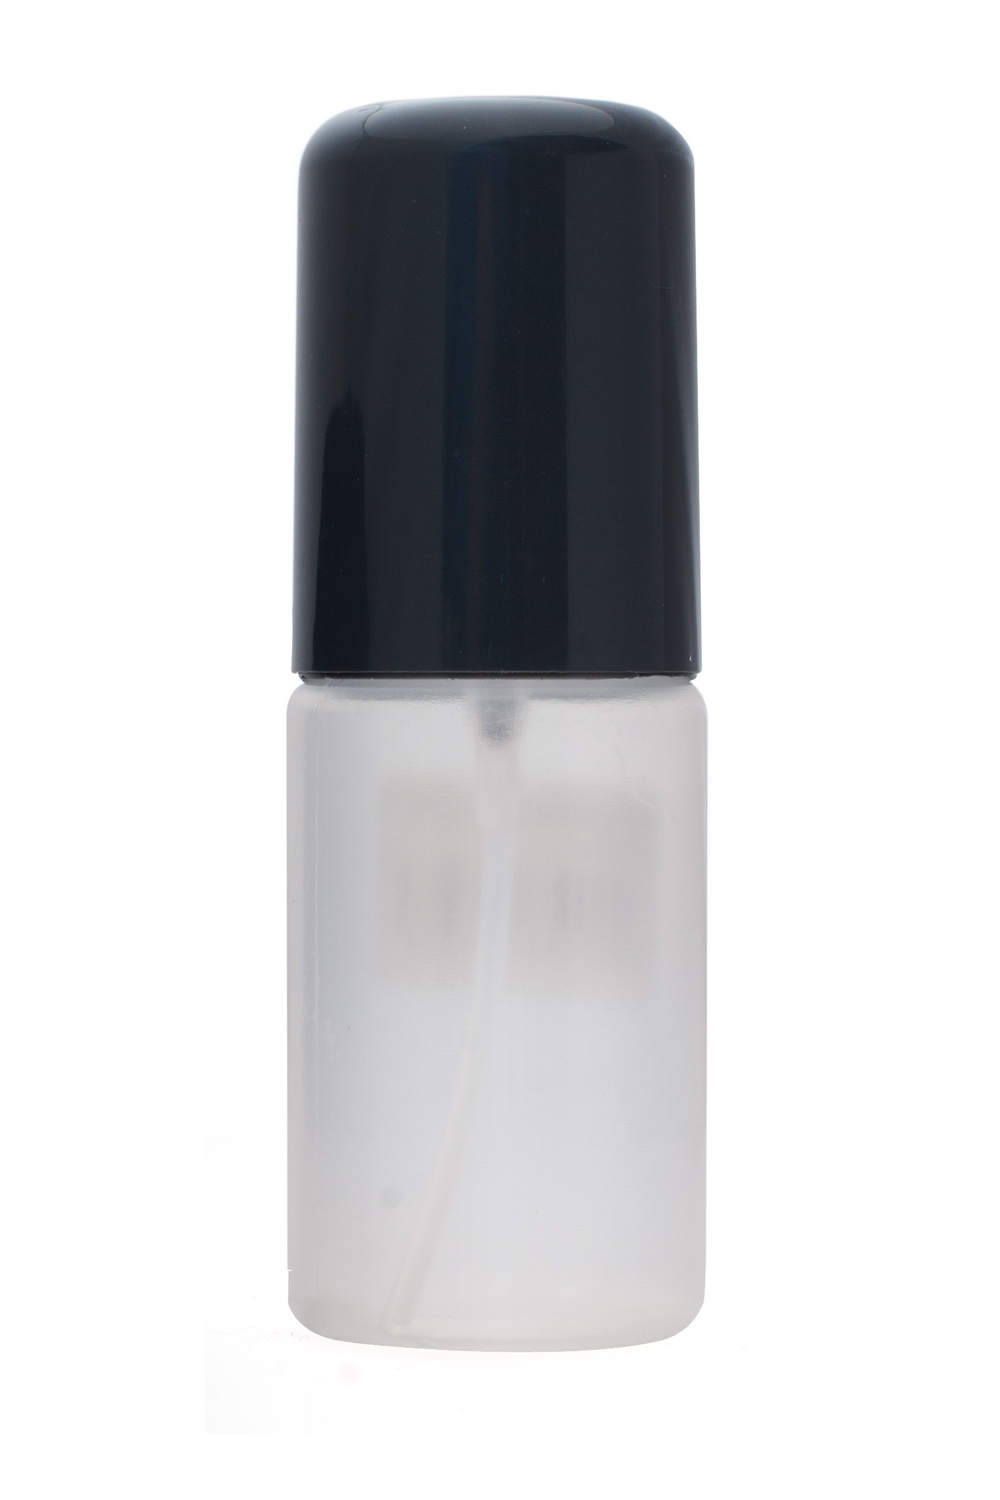 Контейнер-спрей Pump Spray Bottle Empty пустой, 50 мл лэтуаль пустой контейнер для косметических средств